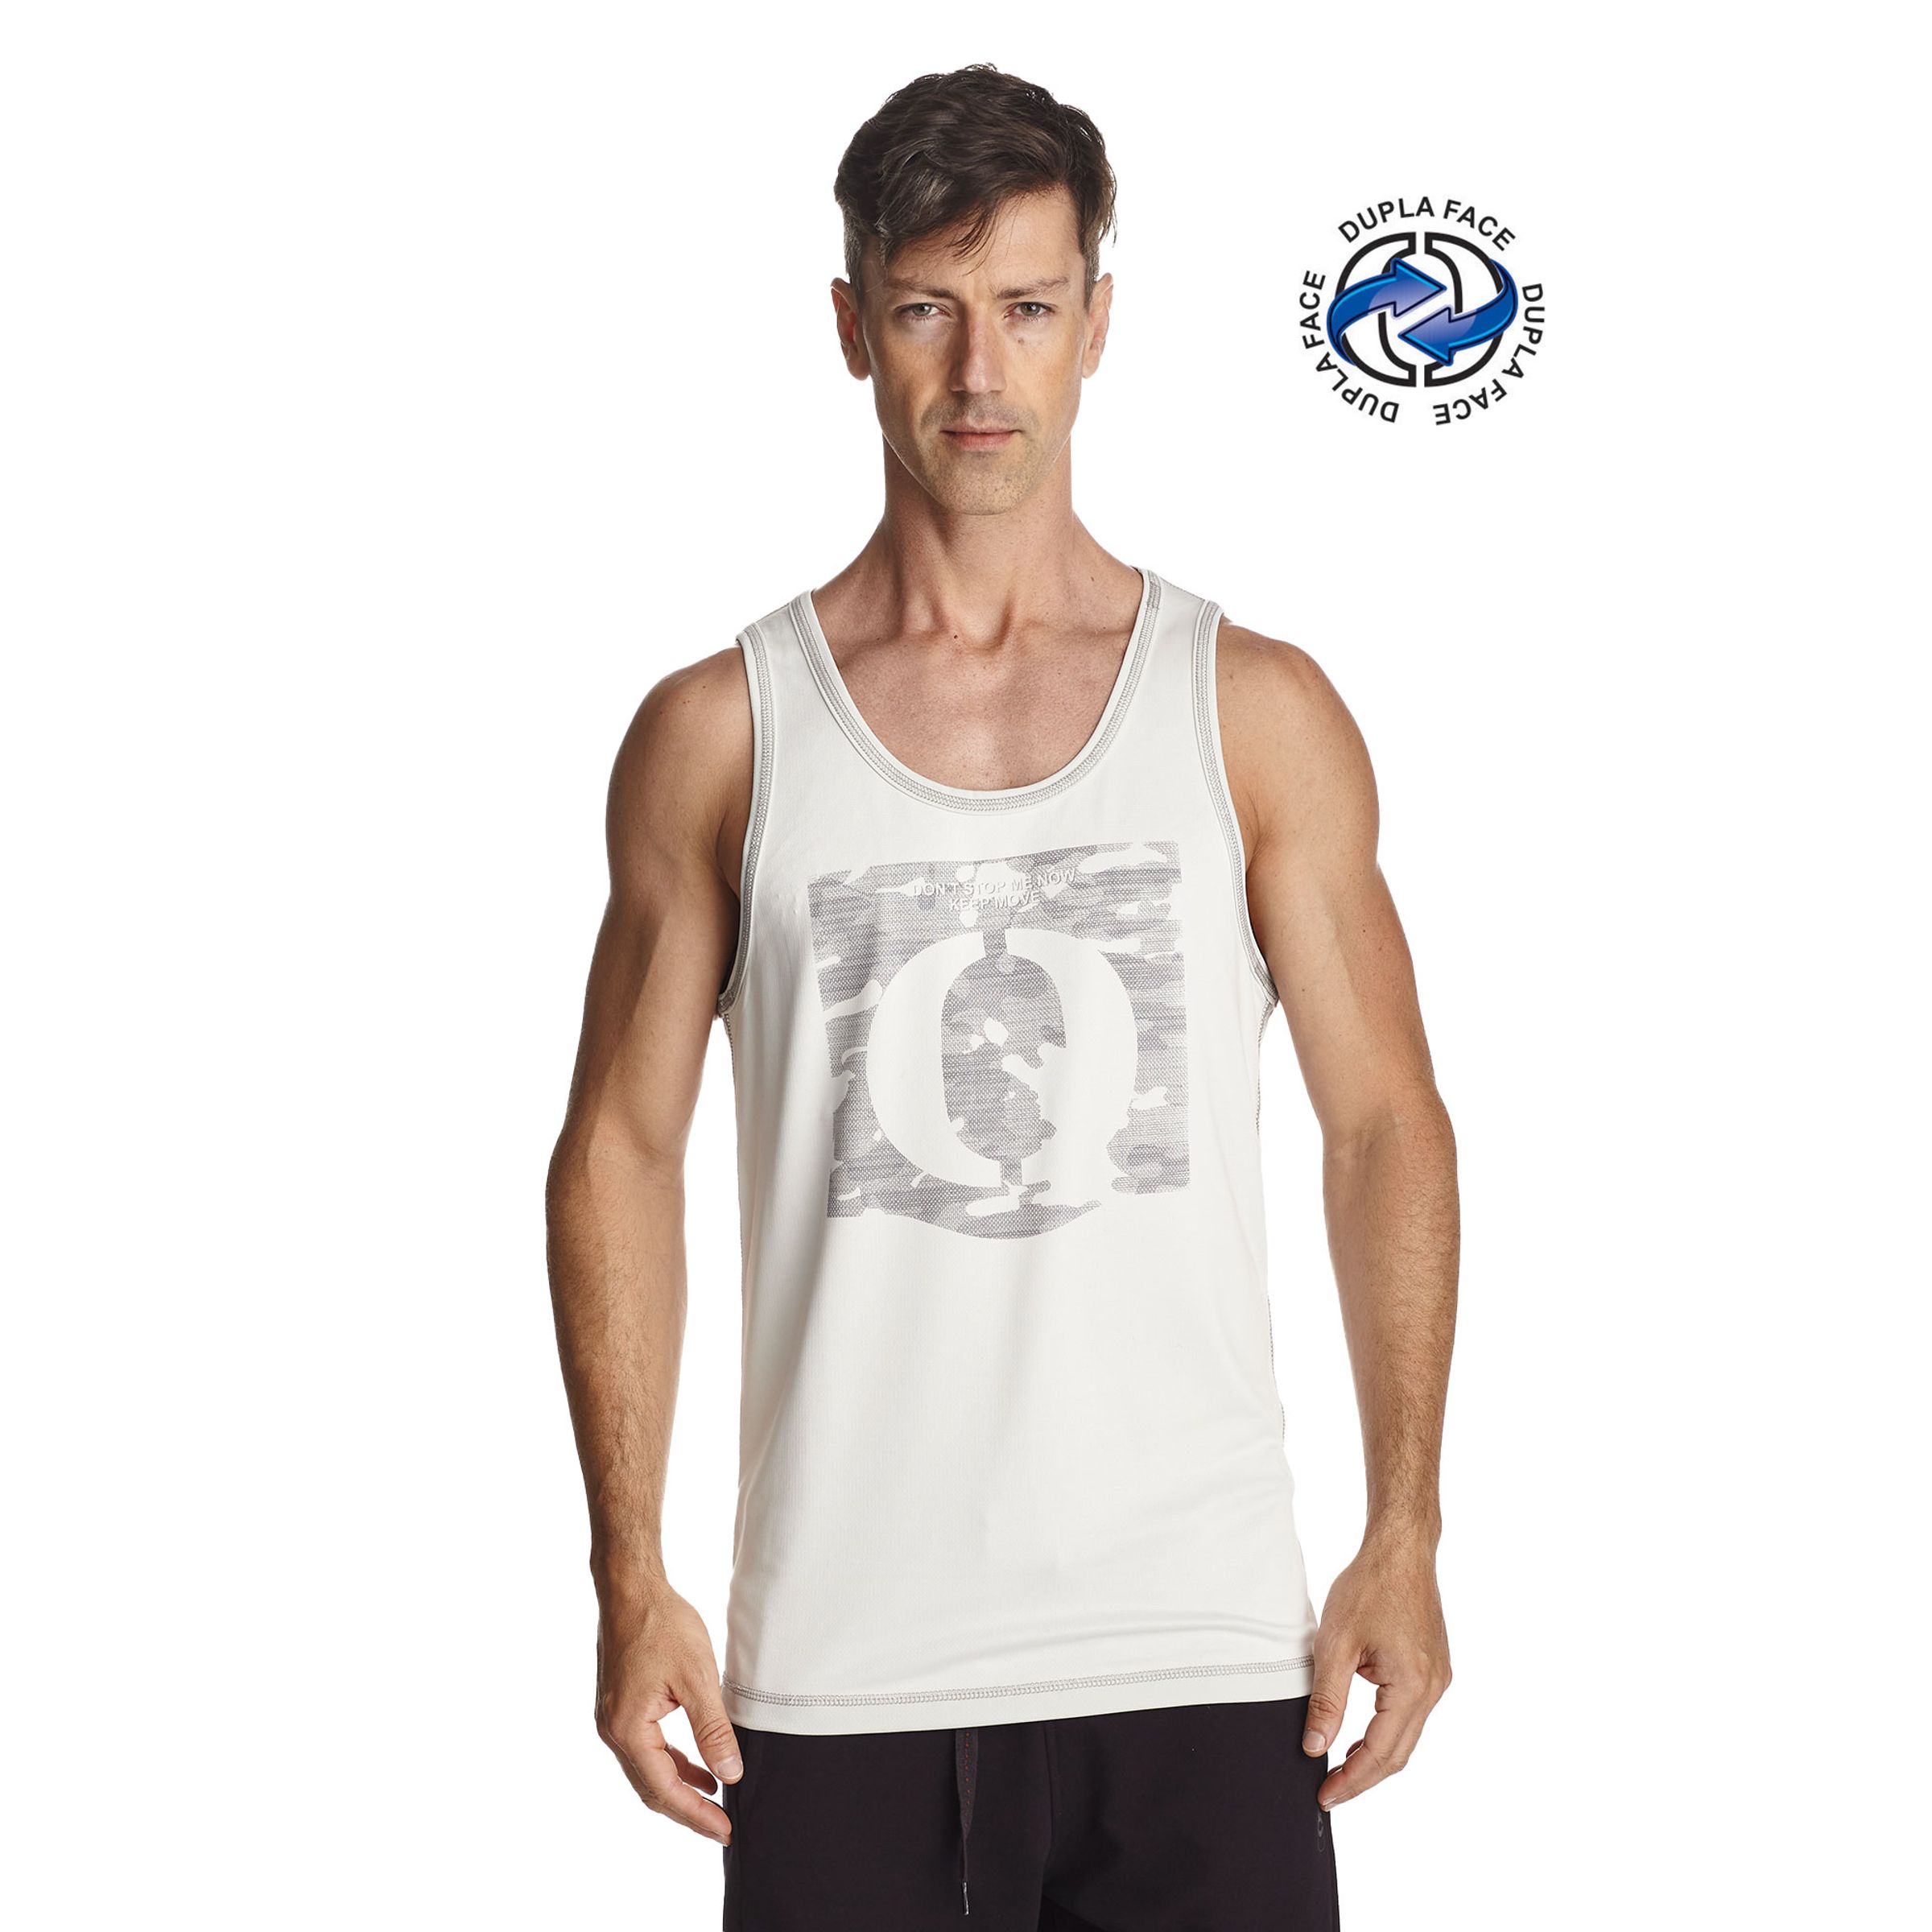 Camiseta-Regata-Masculina-Convicto-Fitness-Dupla-Face